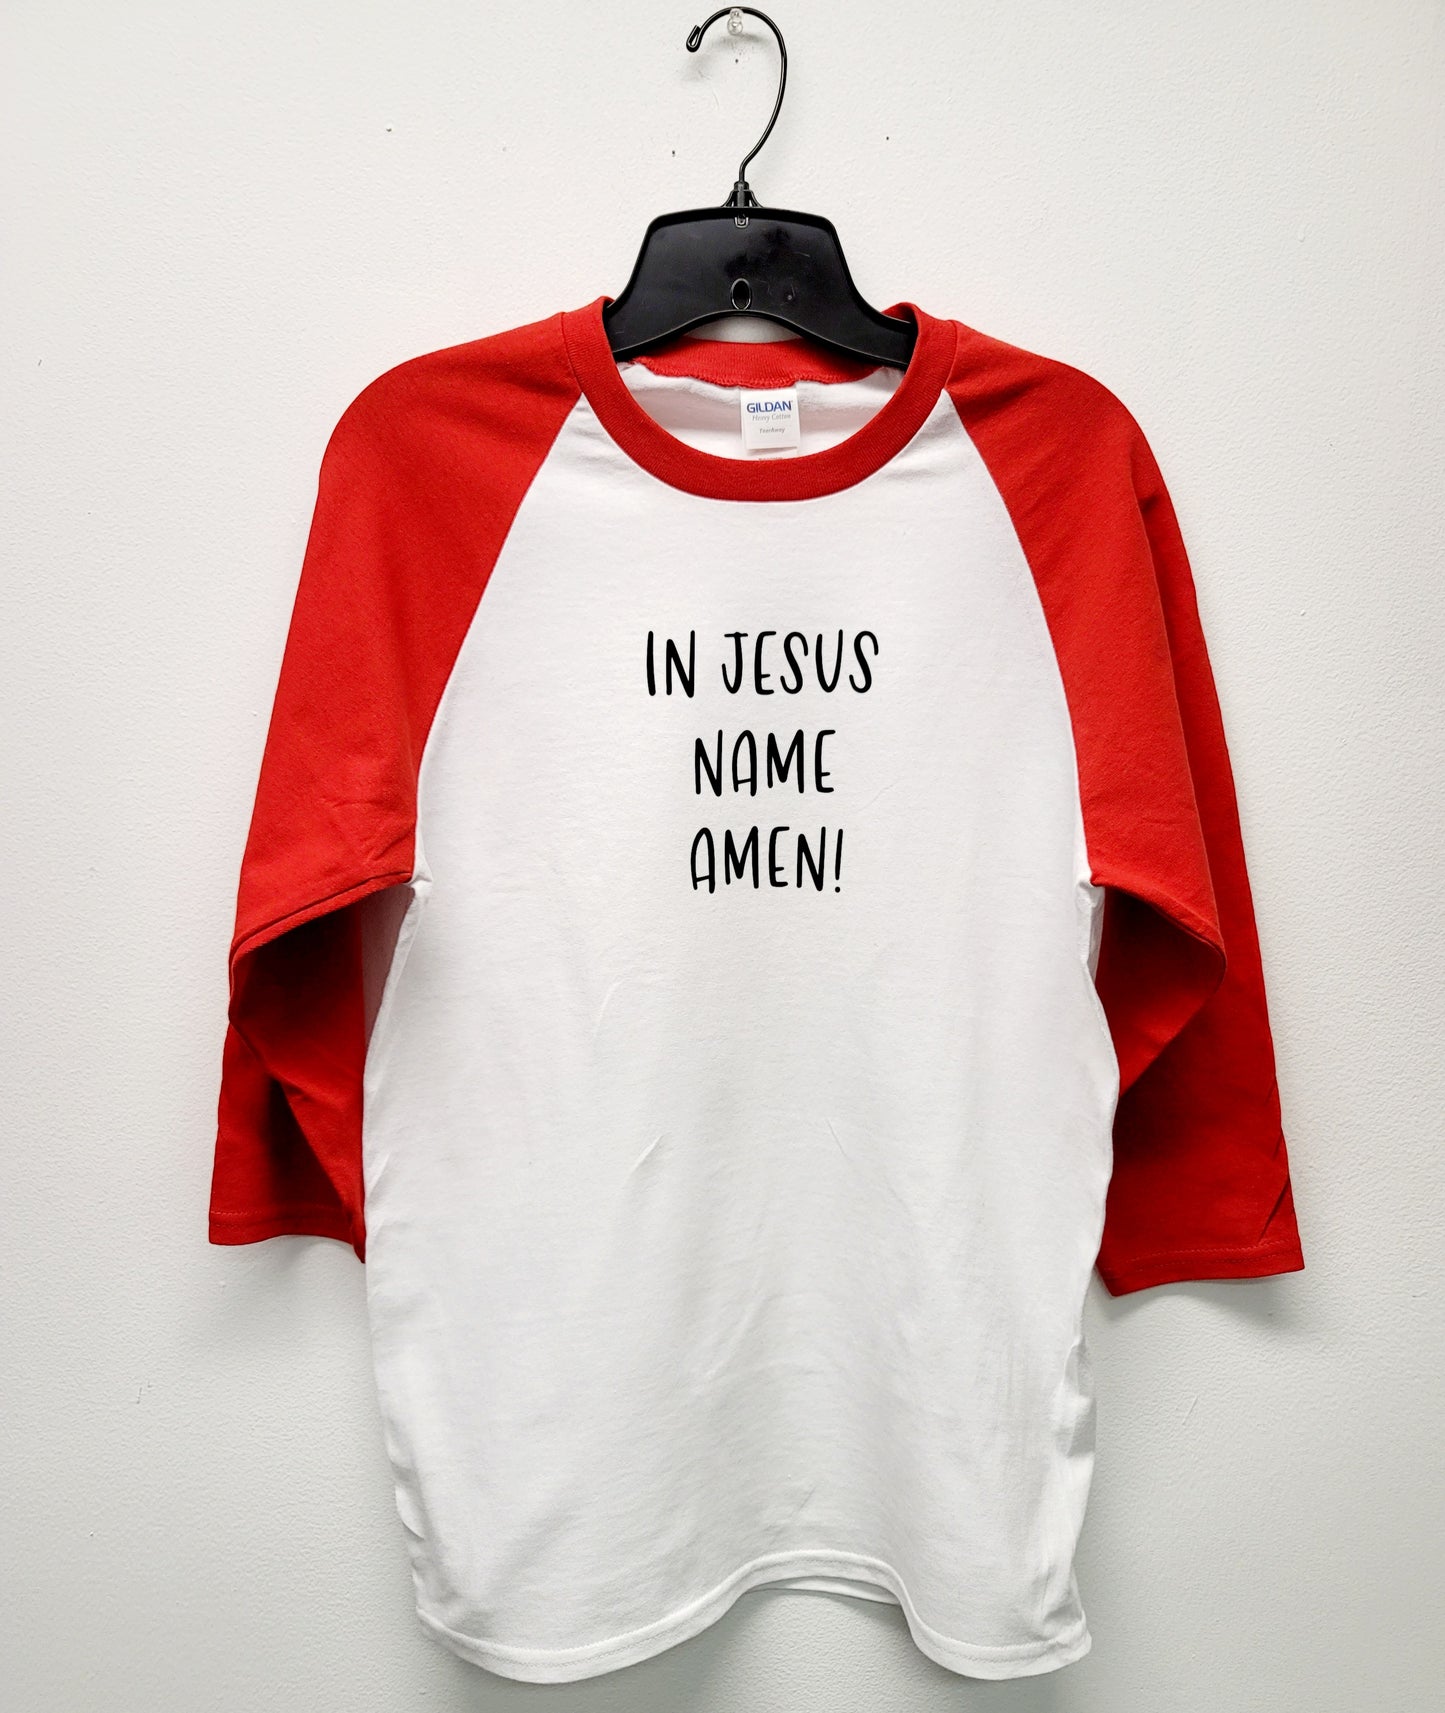 In Jesus name Amen shirt with red raglan sleeve